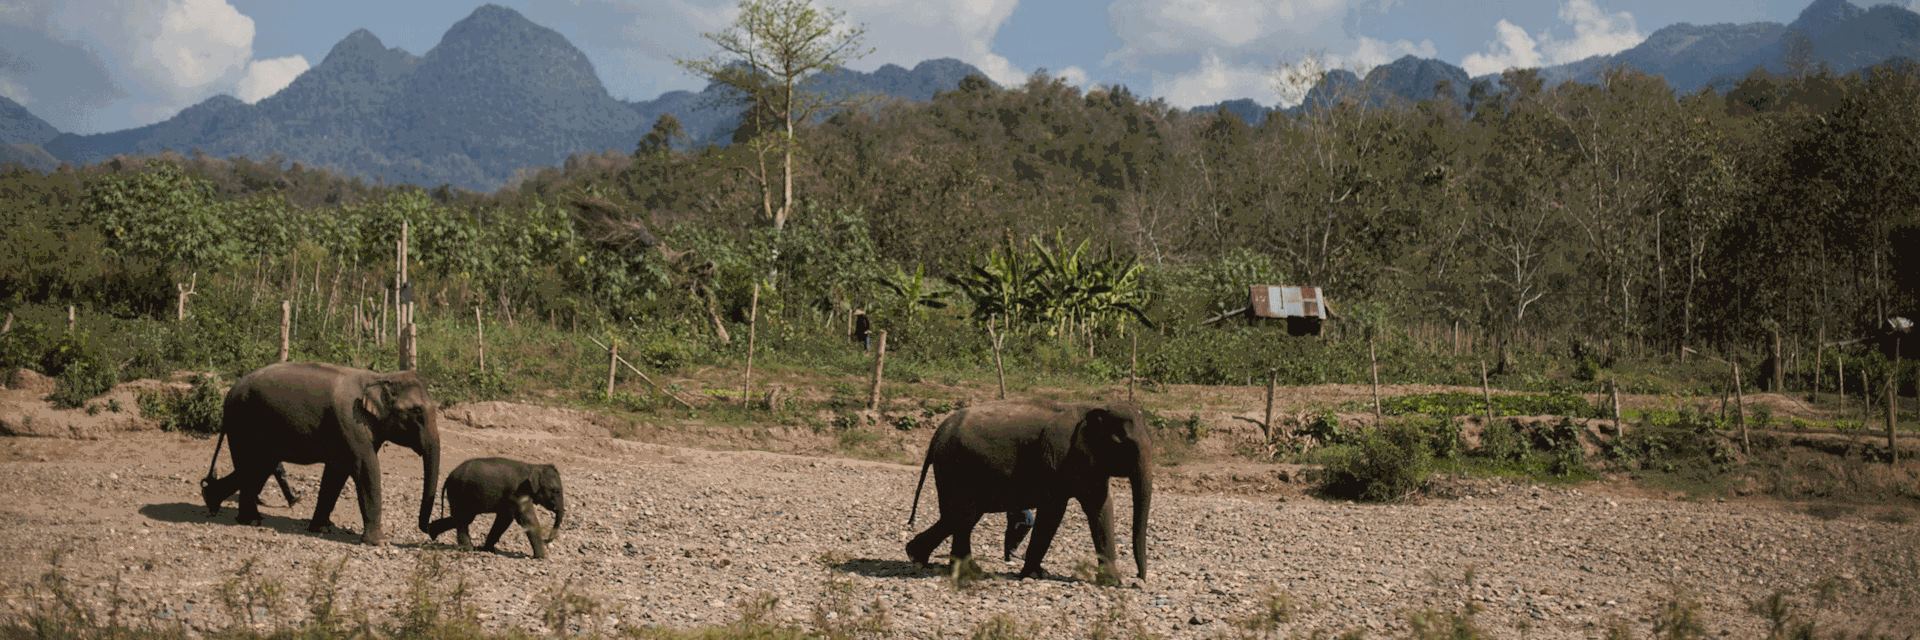 Elephants at MandaLao in Luang Prabang, Laos